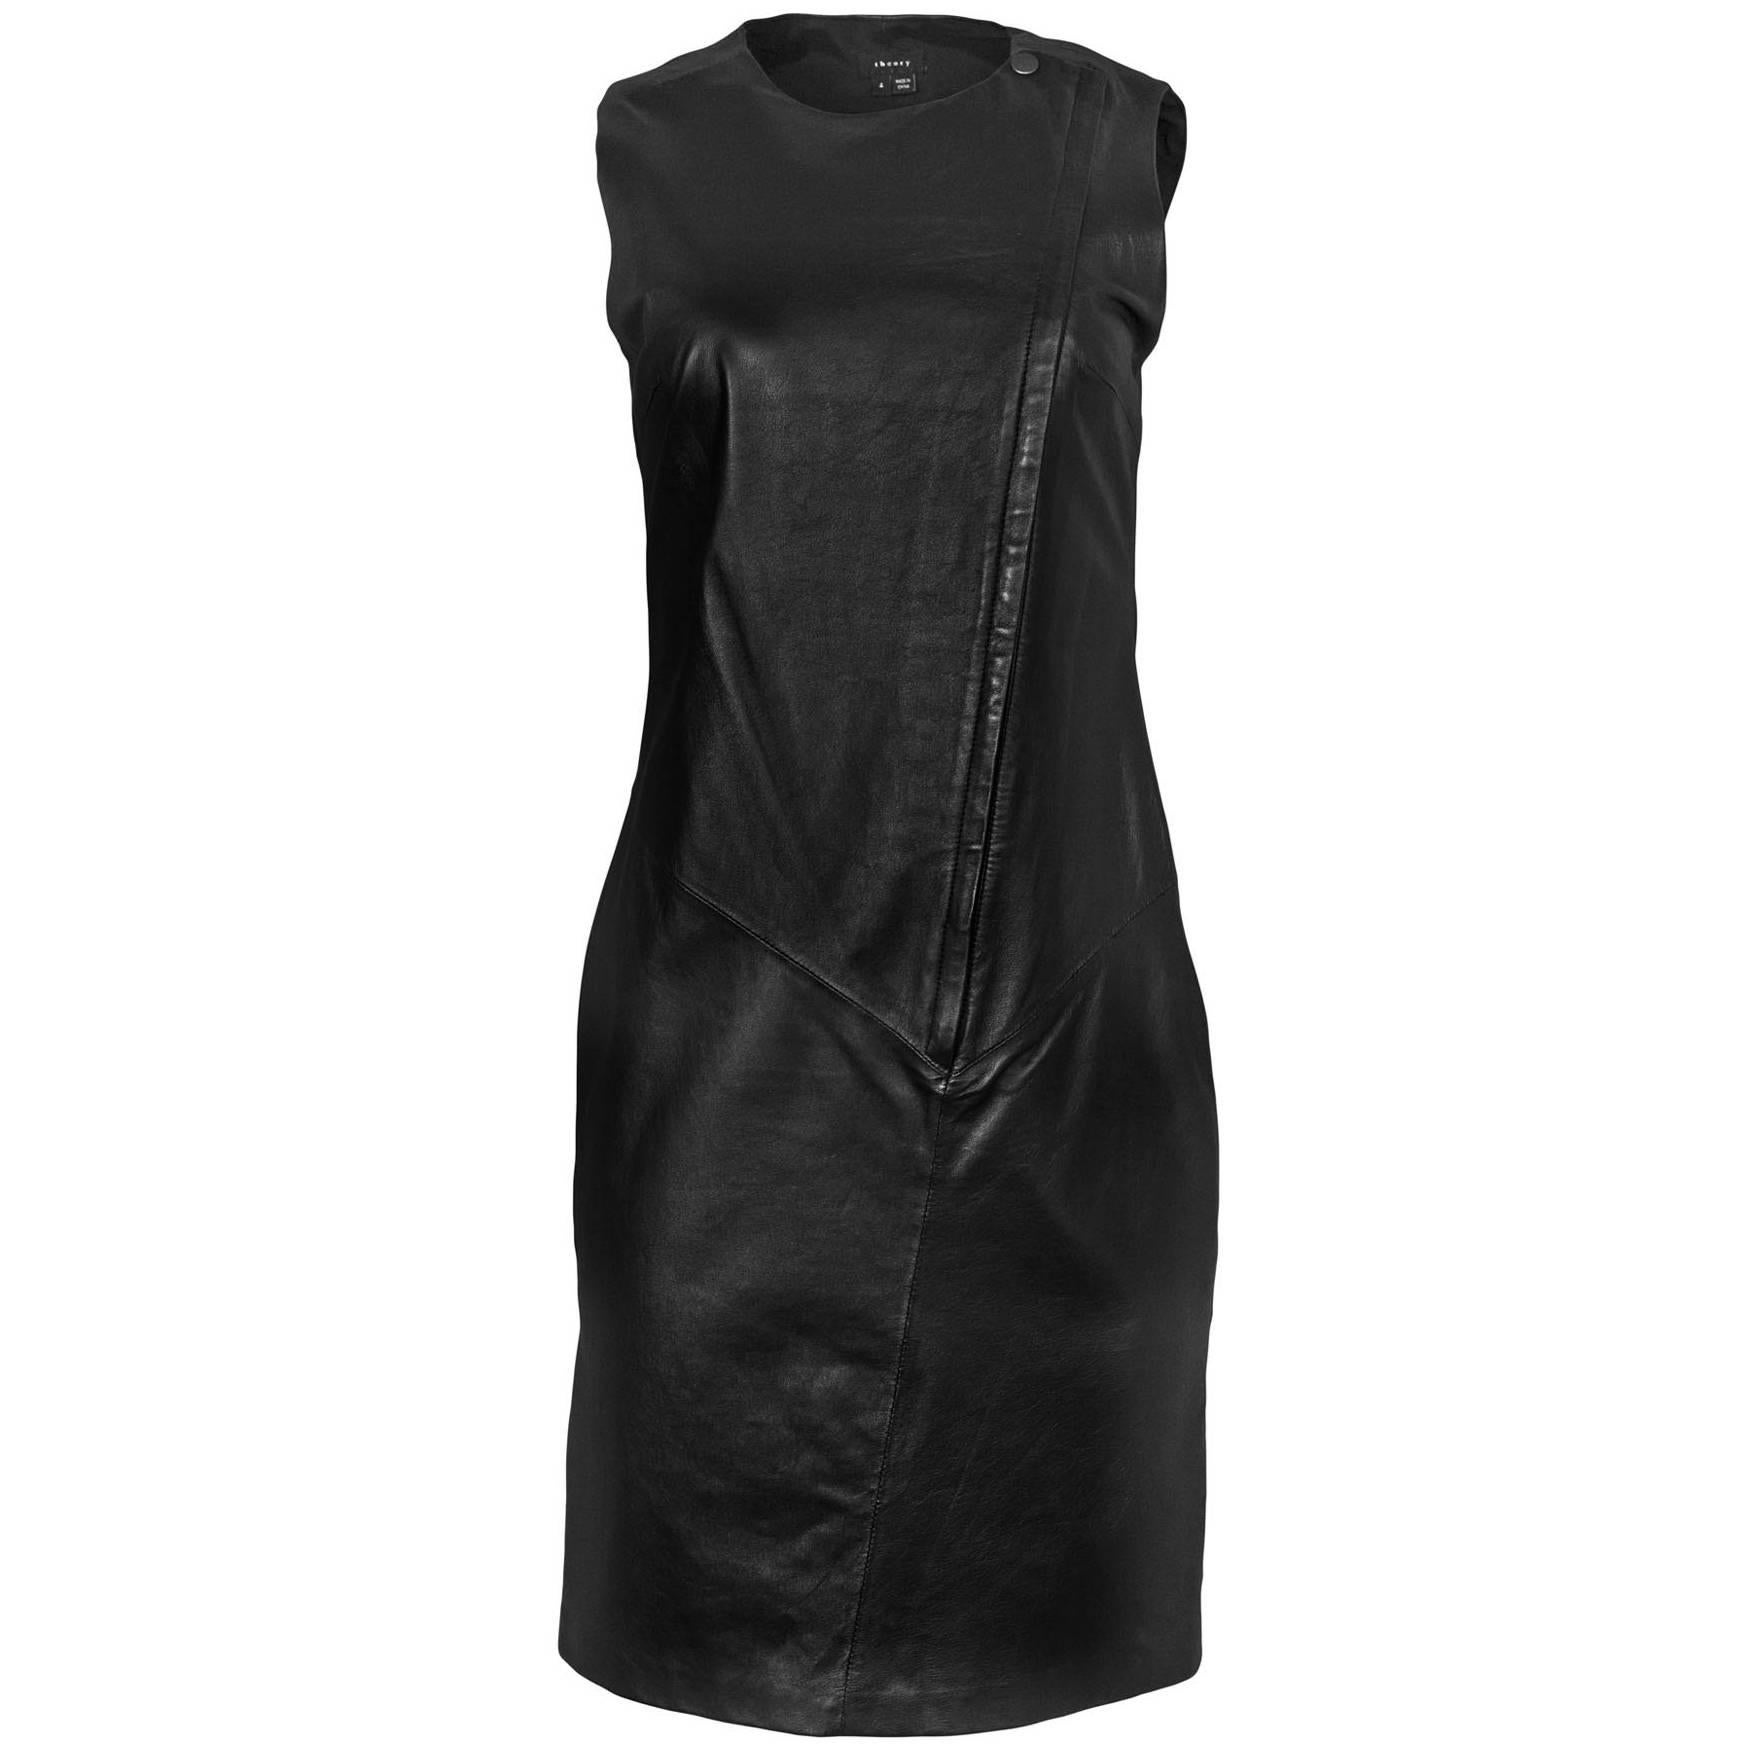 Theory Black Leather Sleeveless Dress Sz 4